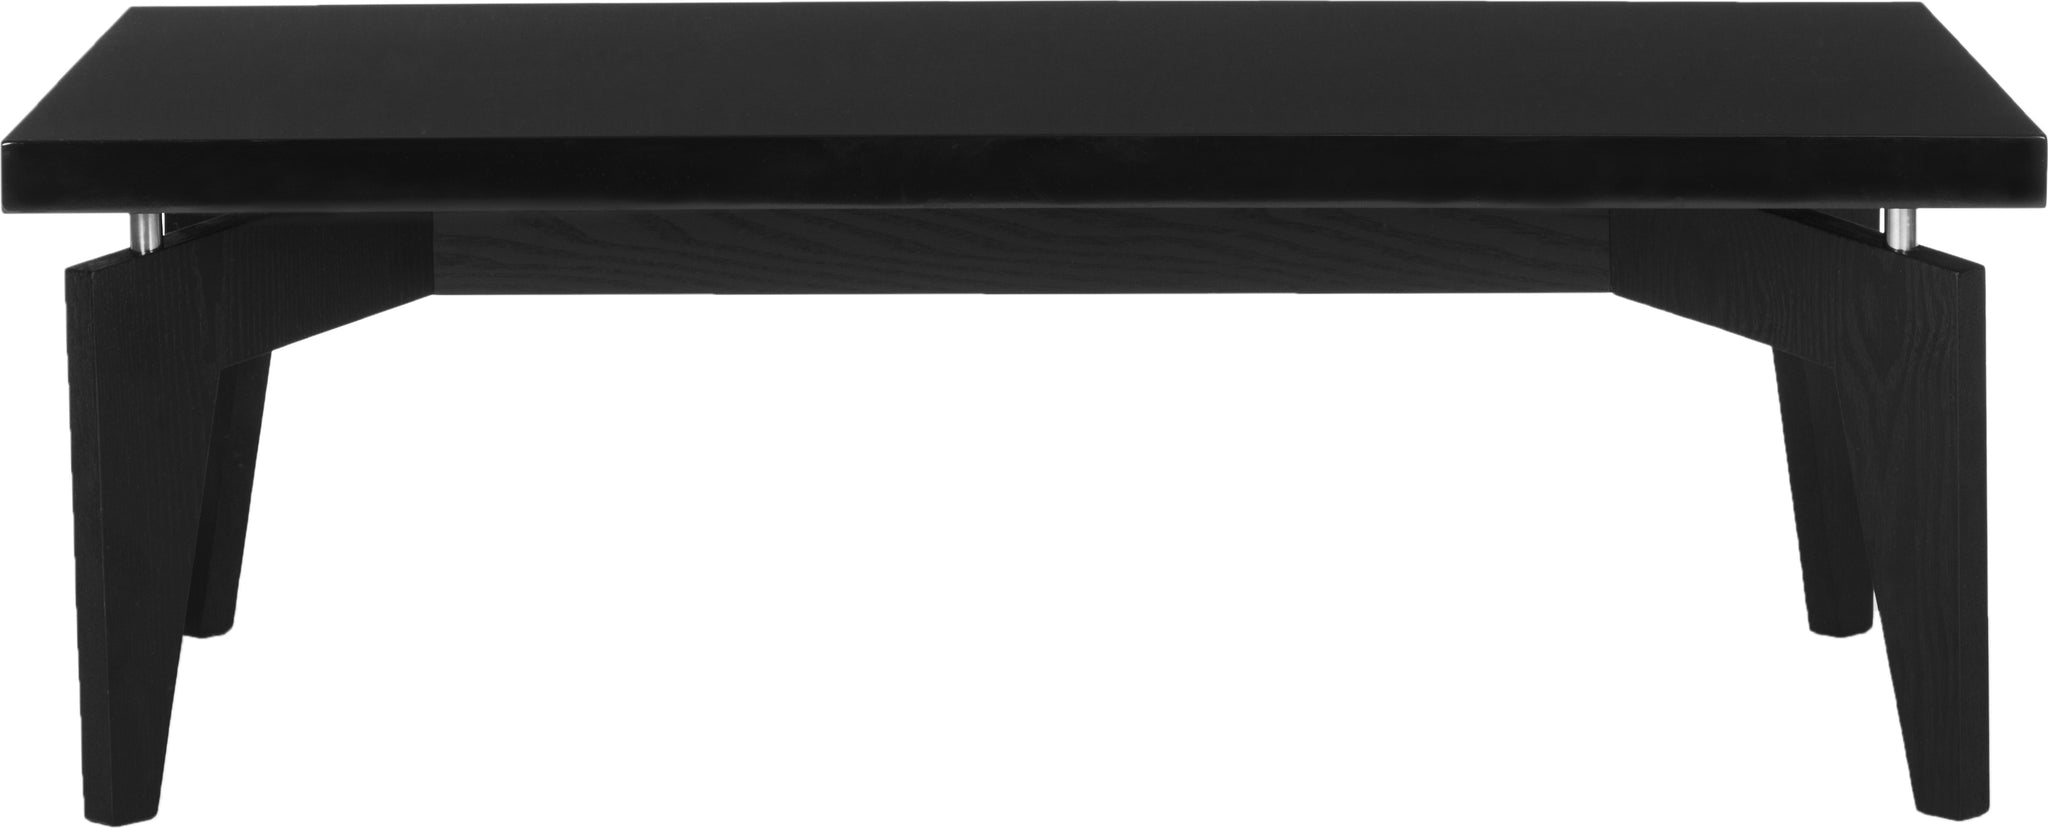 Safavieh Josef Retro Lacquer Floating Top Coffee Table Black Furniture main image